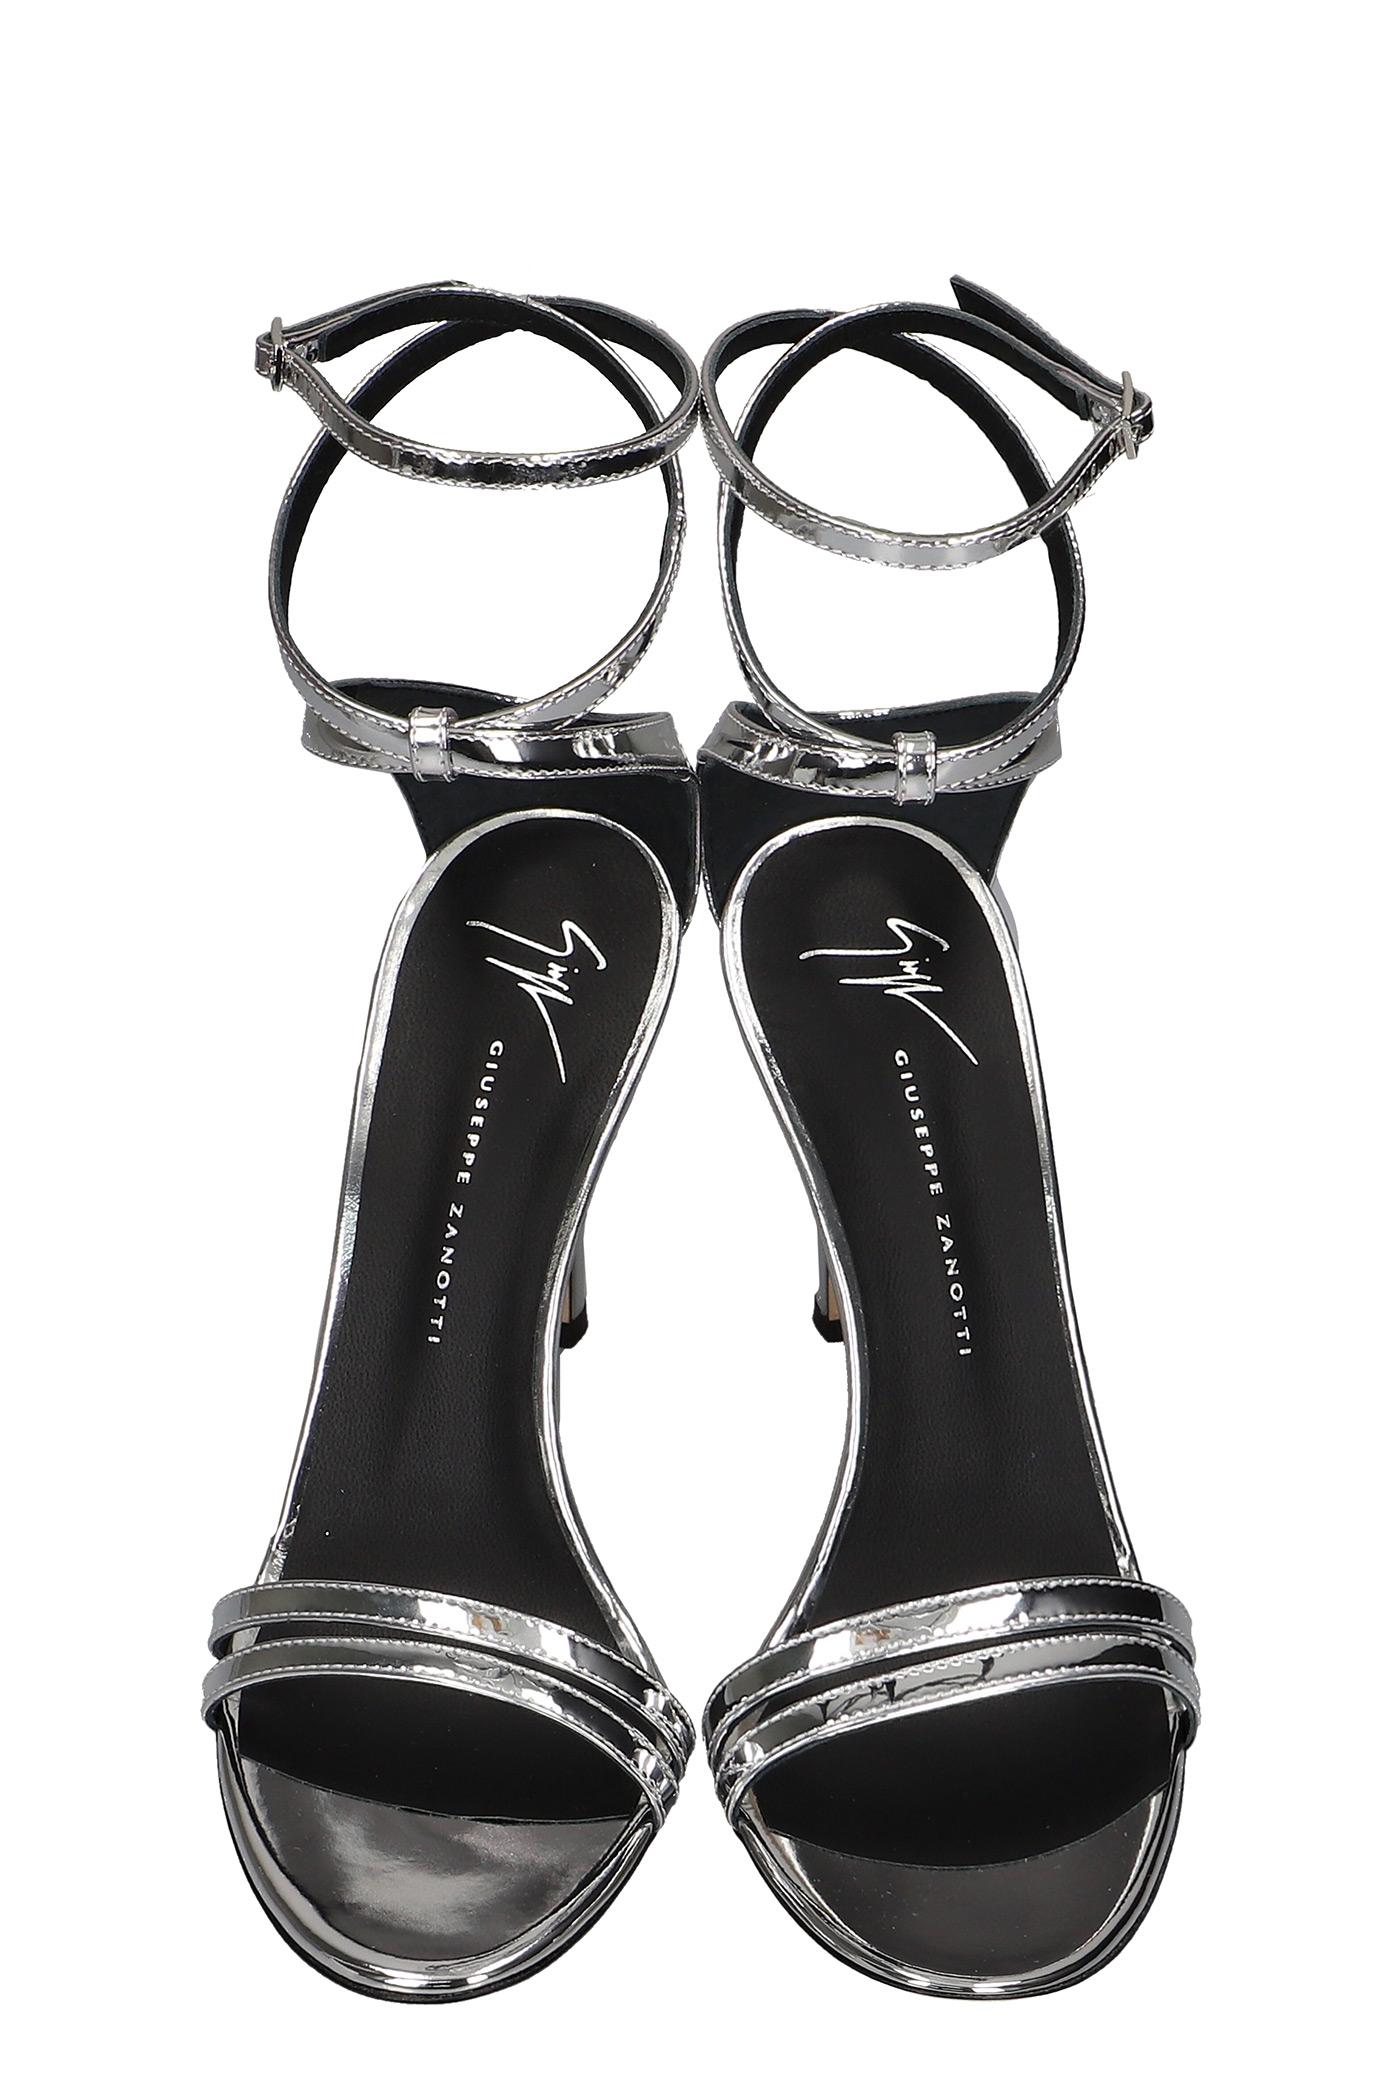 Giuseppe Zanotti Catia Sandals In Leather in Metallic | Lyst